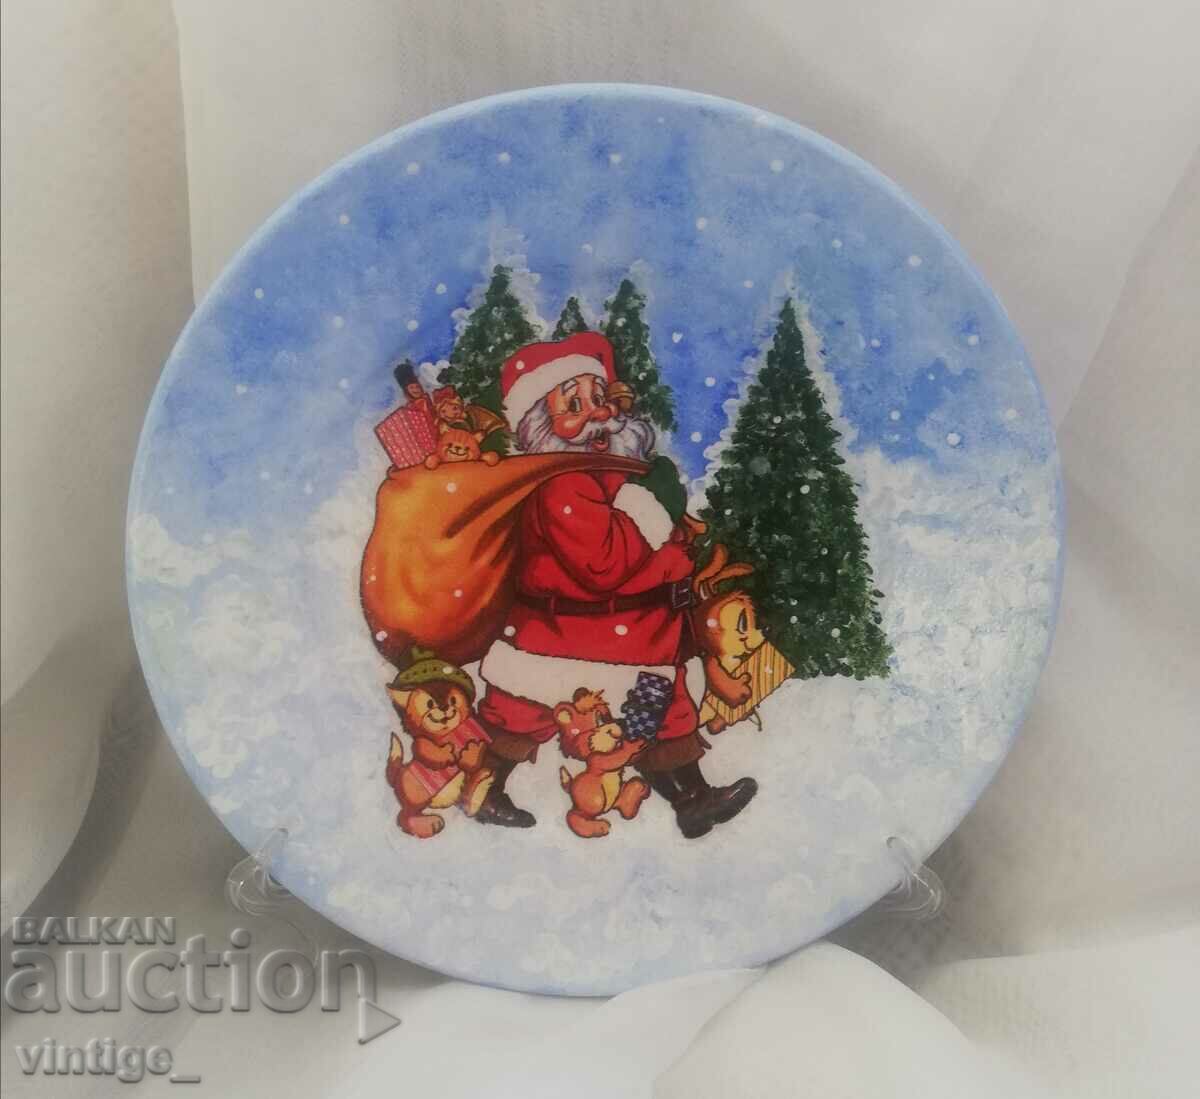 Decorative Christmas plate